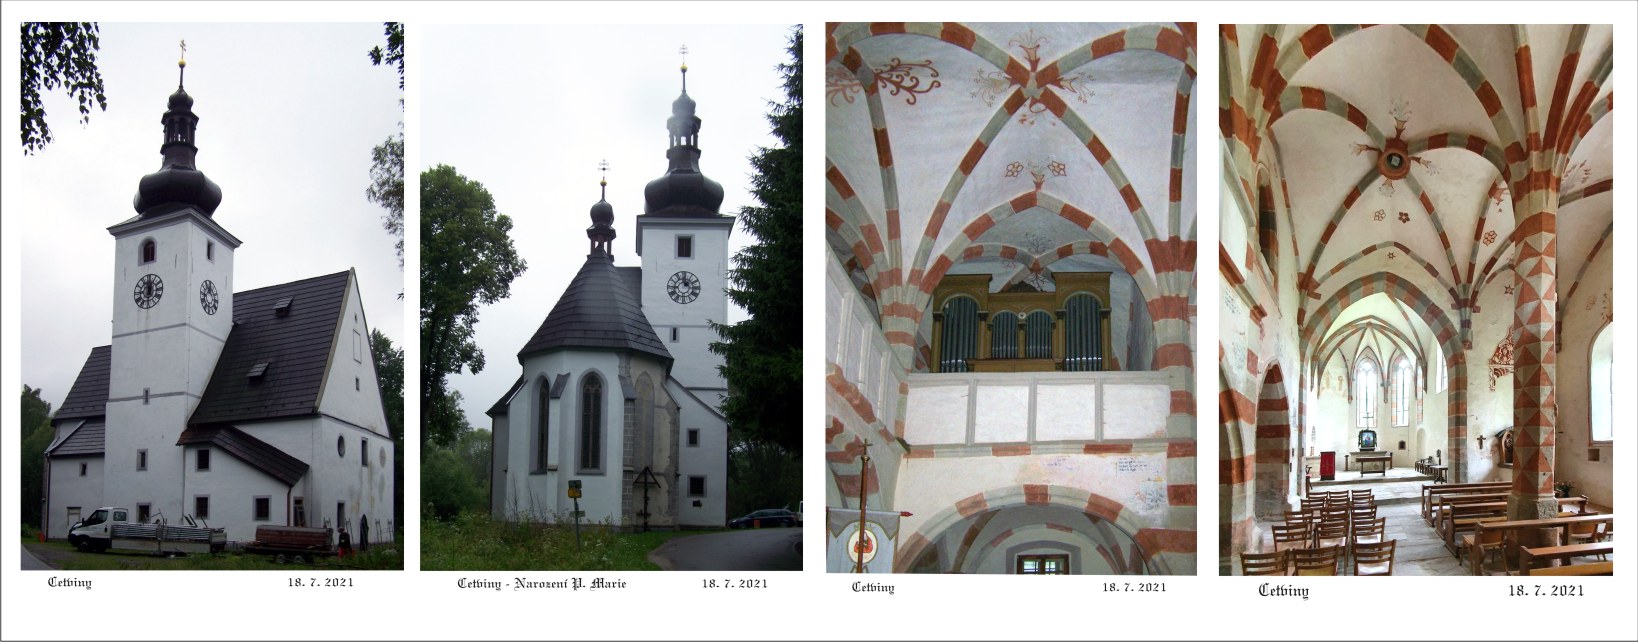 Cetviny - obnovený kostel Narození P. Marie.